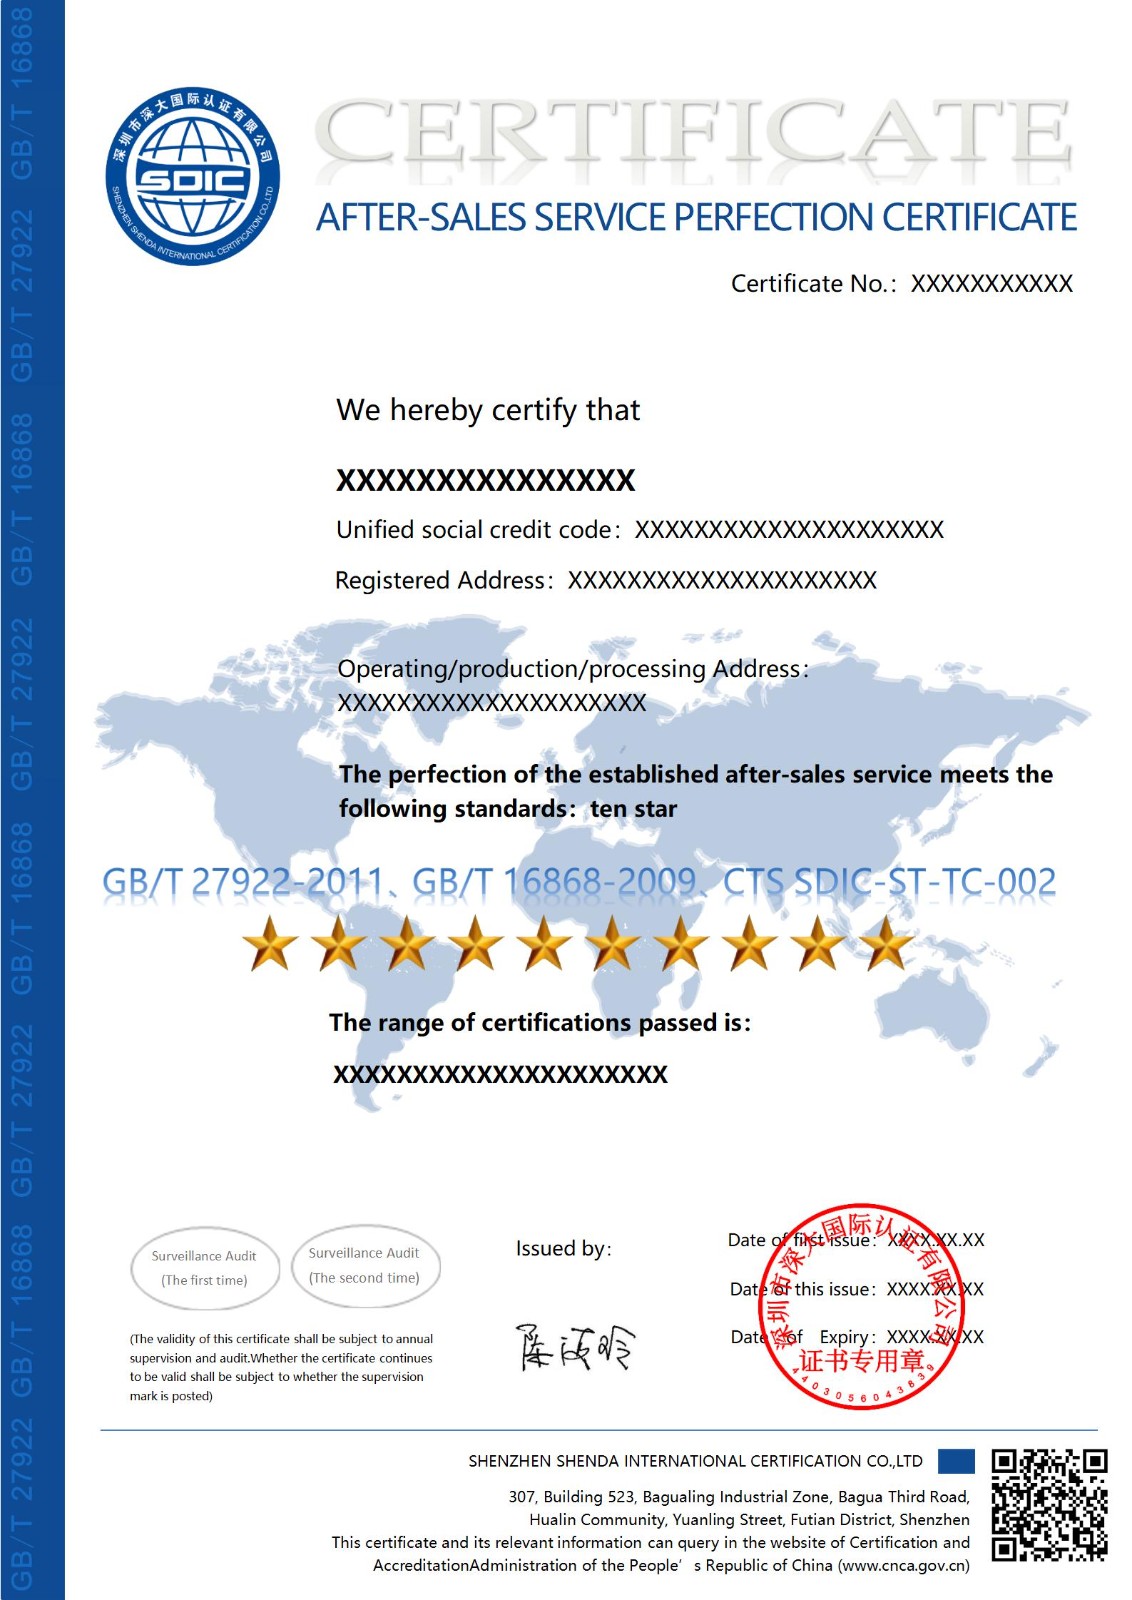 GB/T 27922售后服务完善程度认证证书-英文版